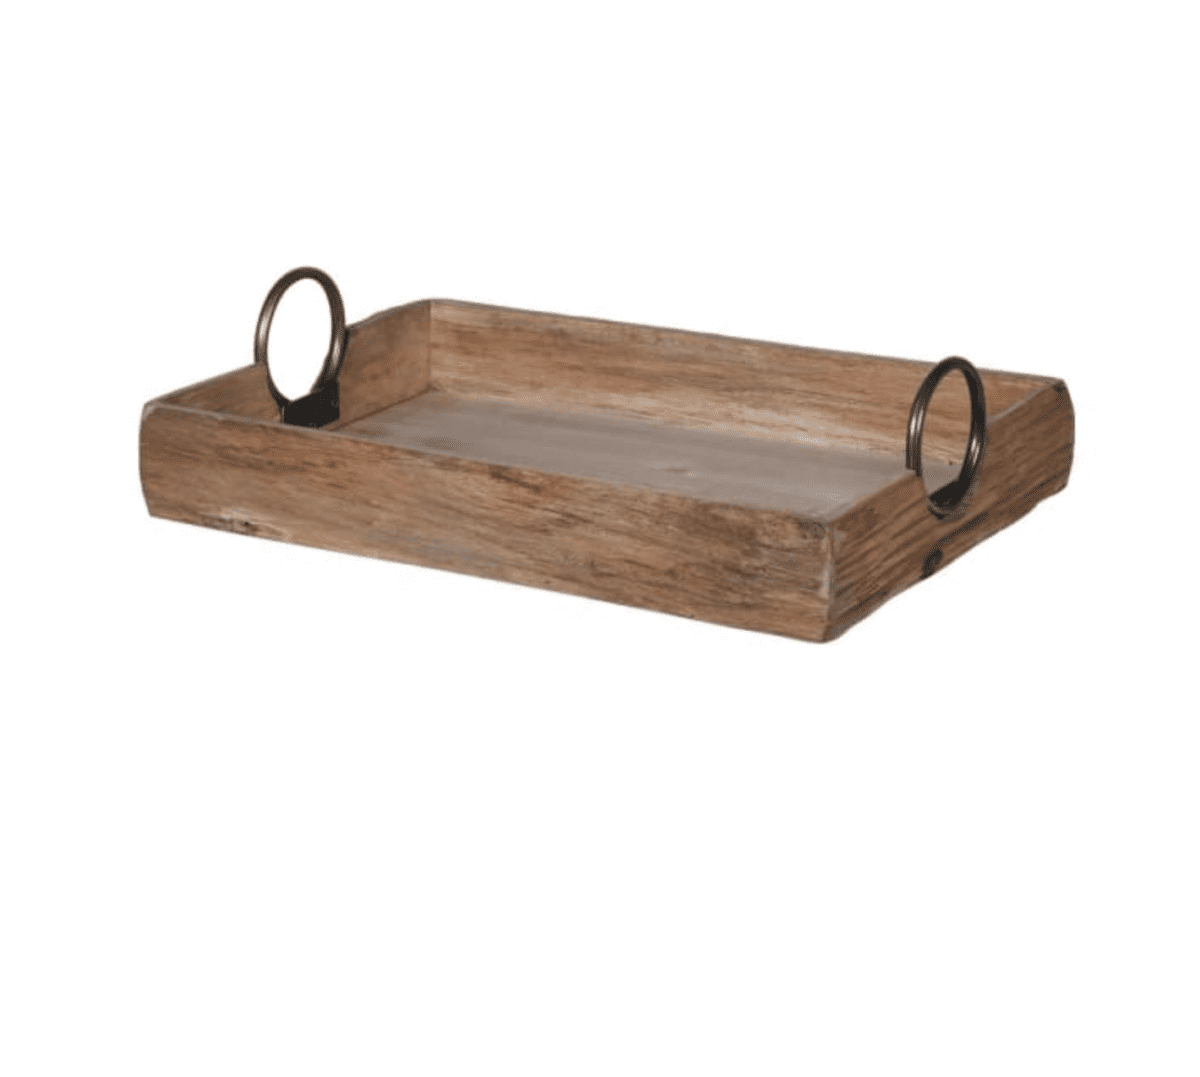 Wooden tray with circular iron handles.